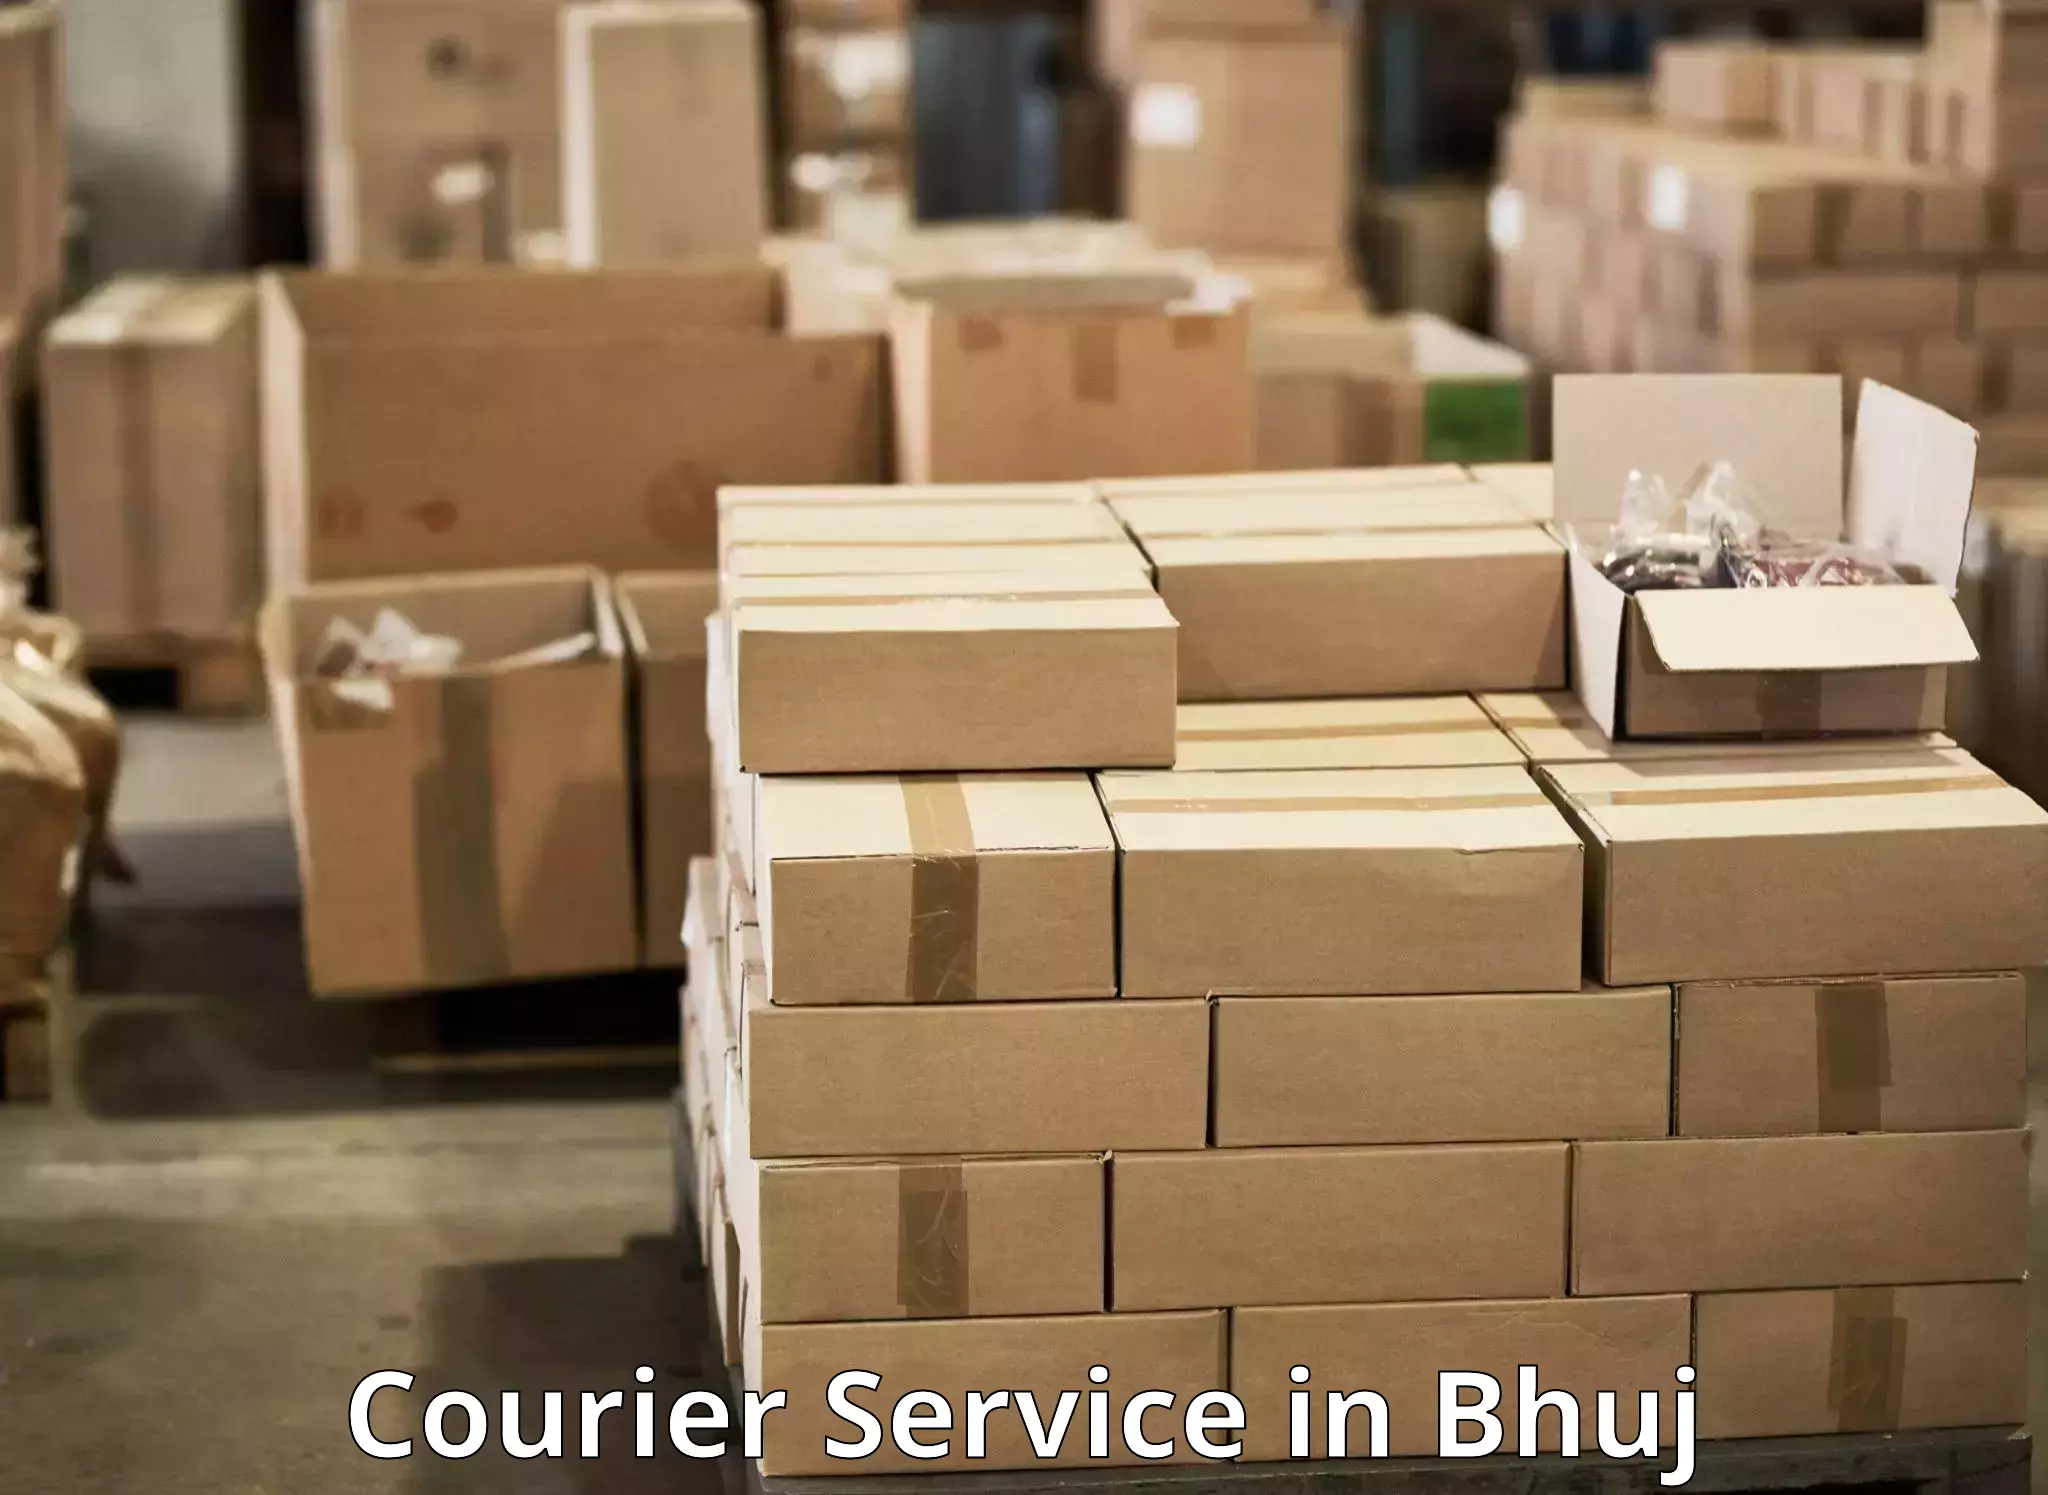 E-commerce fulfillment in Bhuj